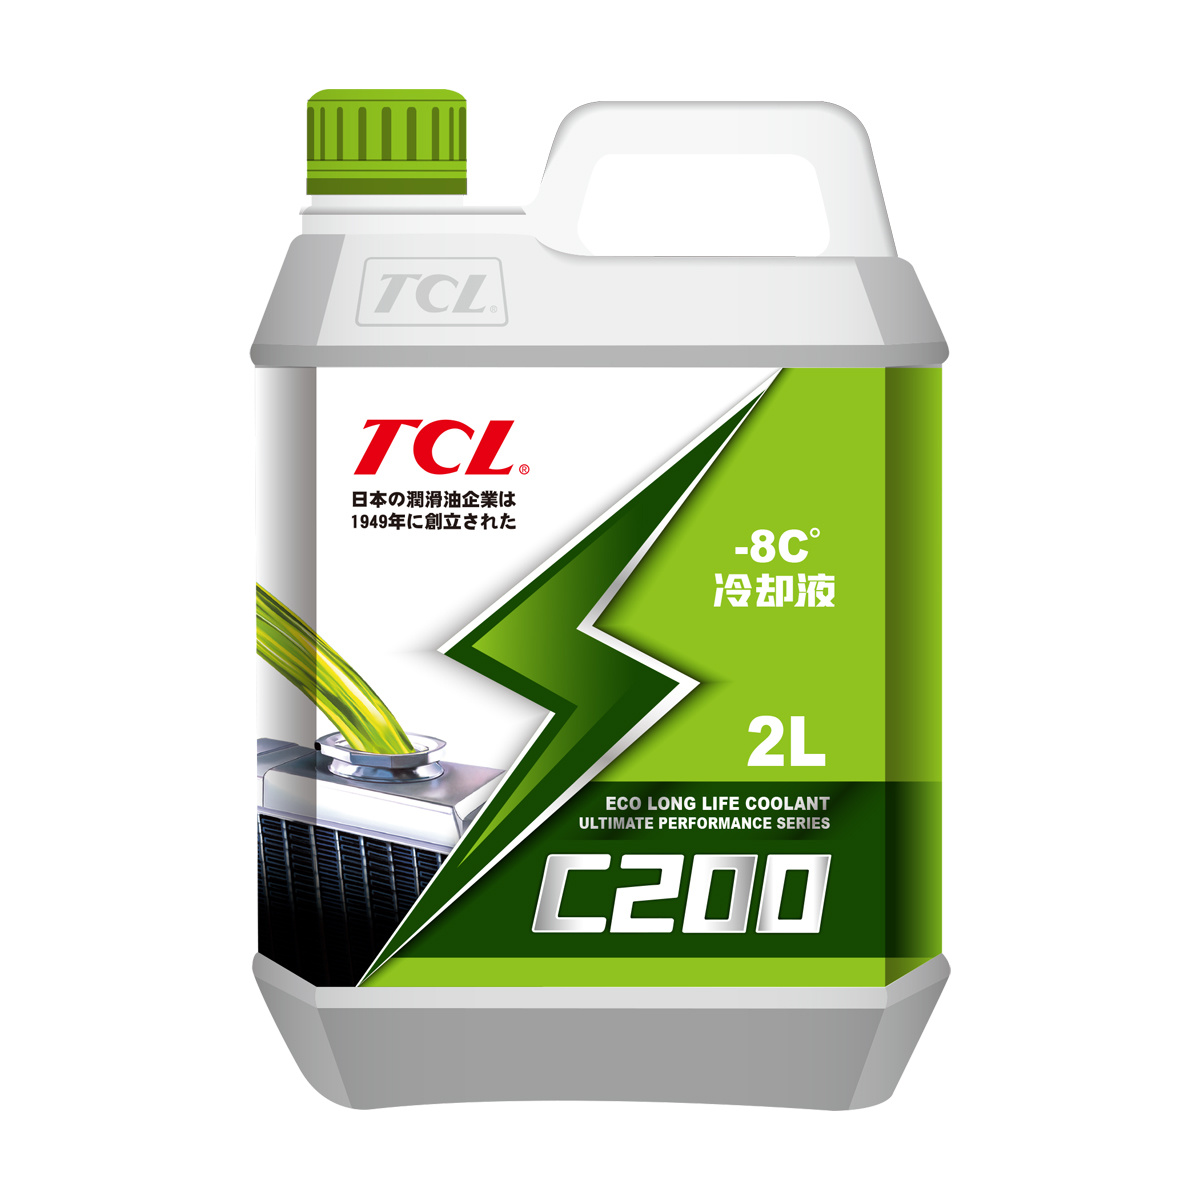 TCL C200水箱宝